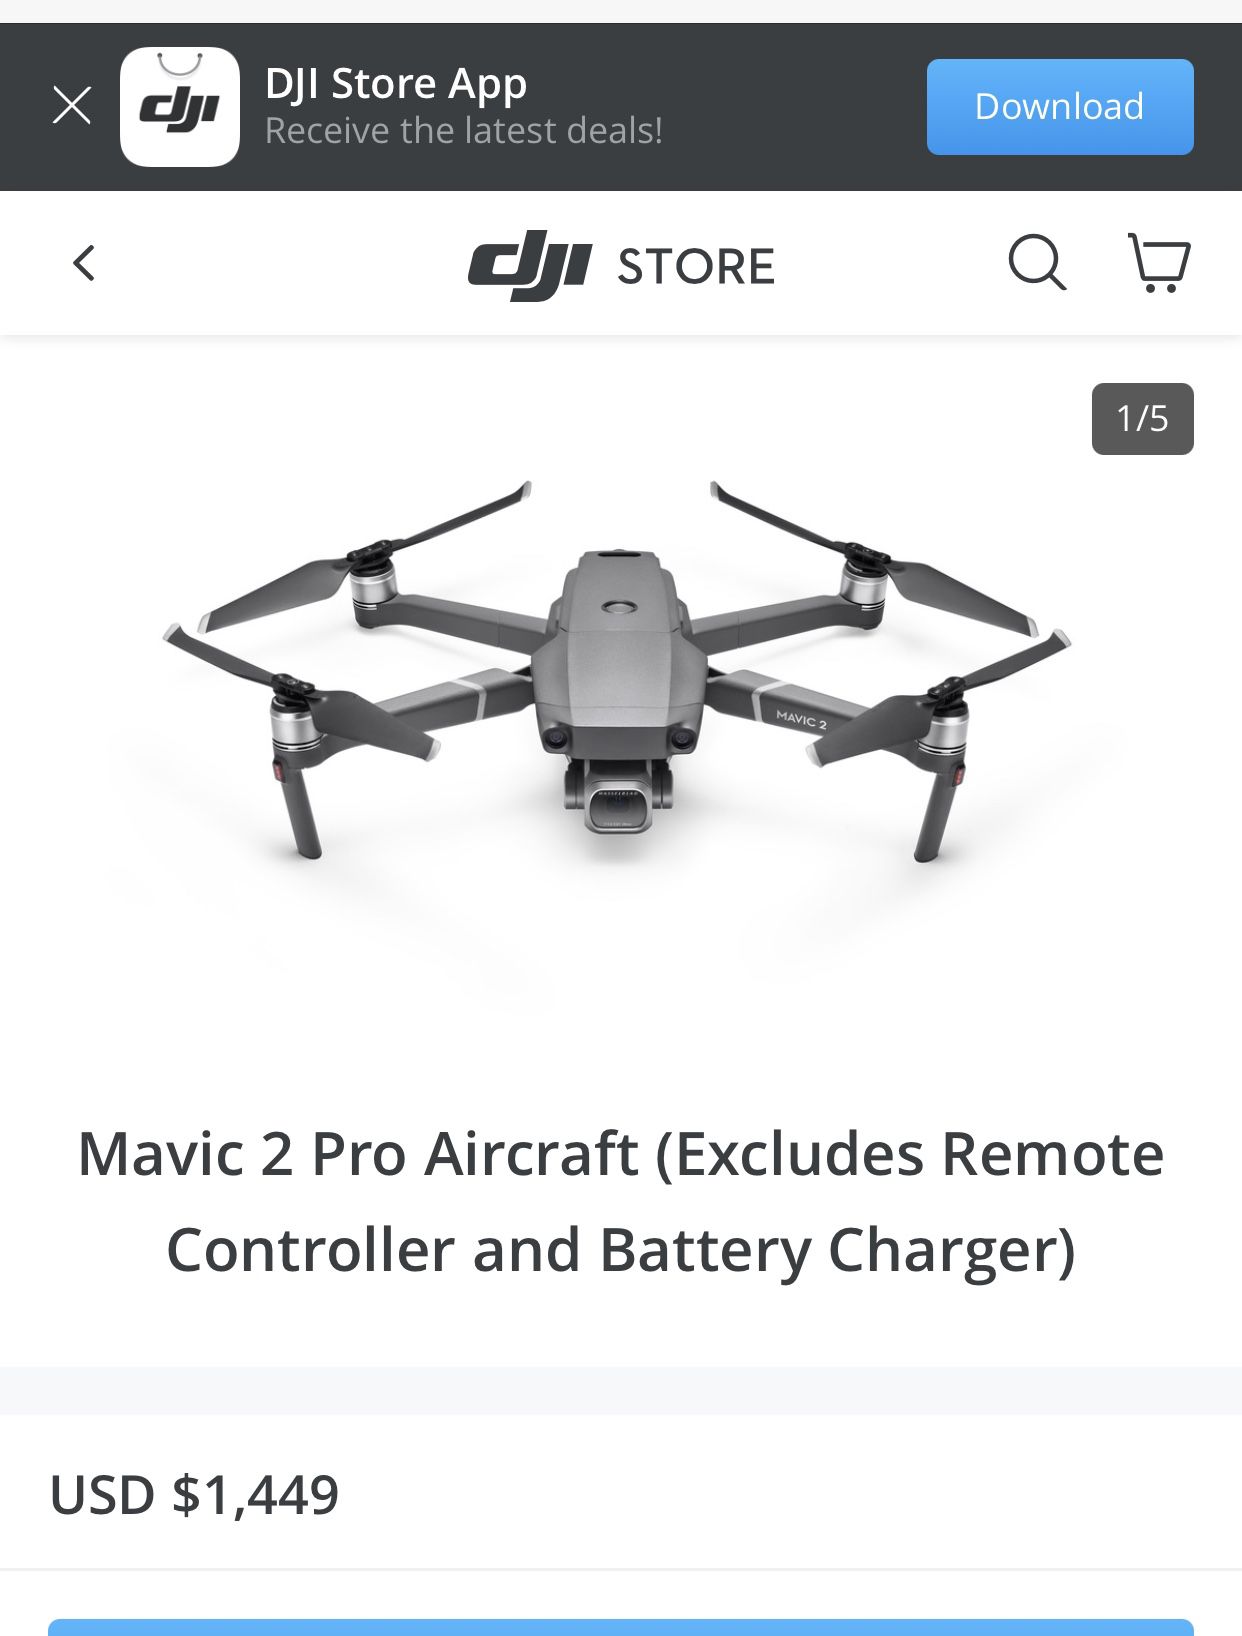 Dji Mavic 2 Pro Drone new in box